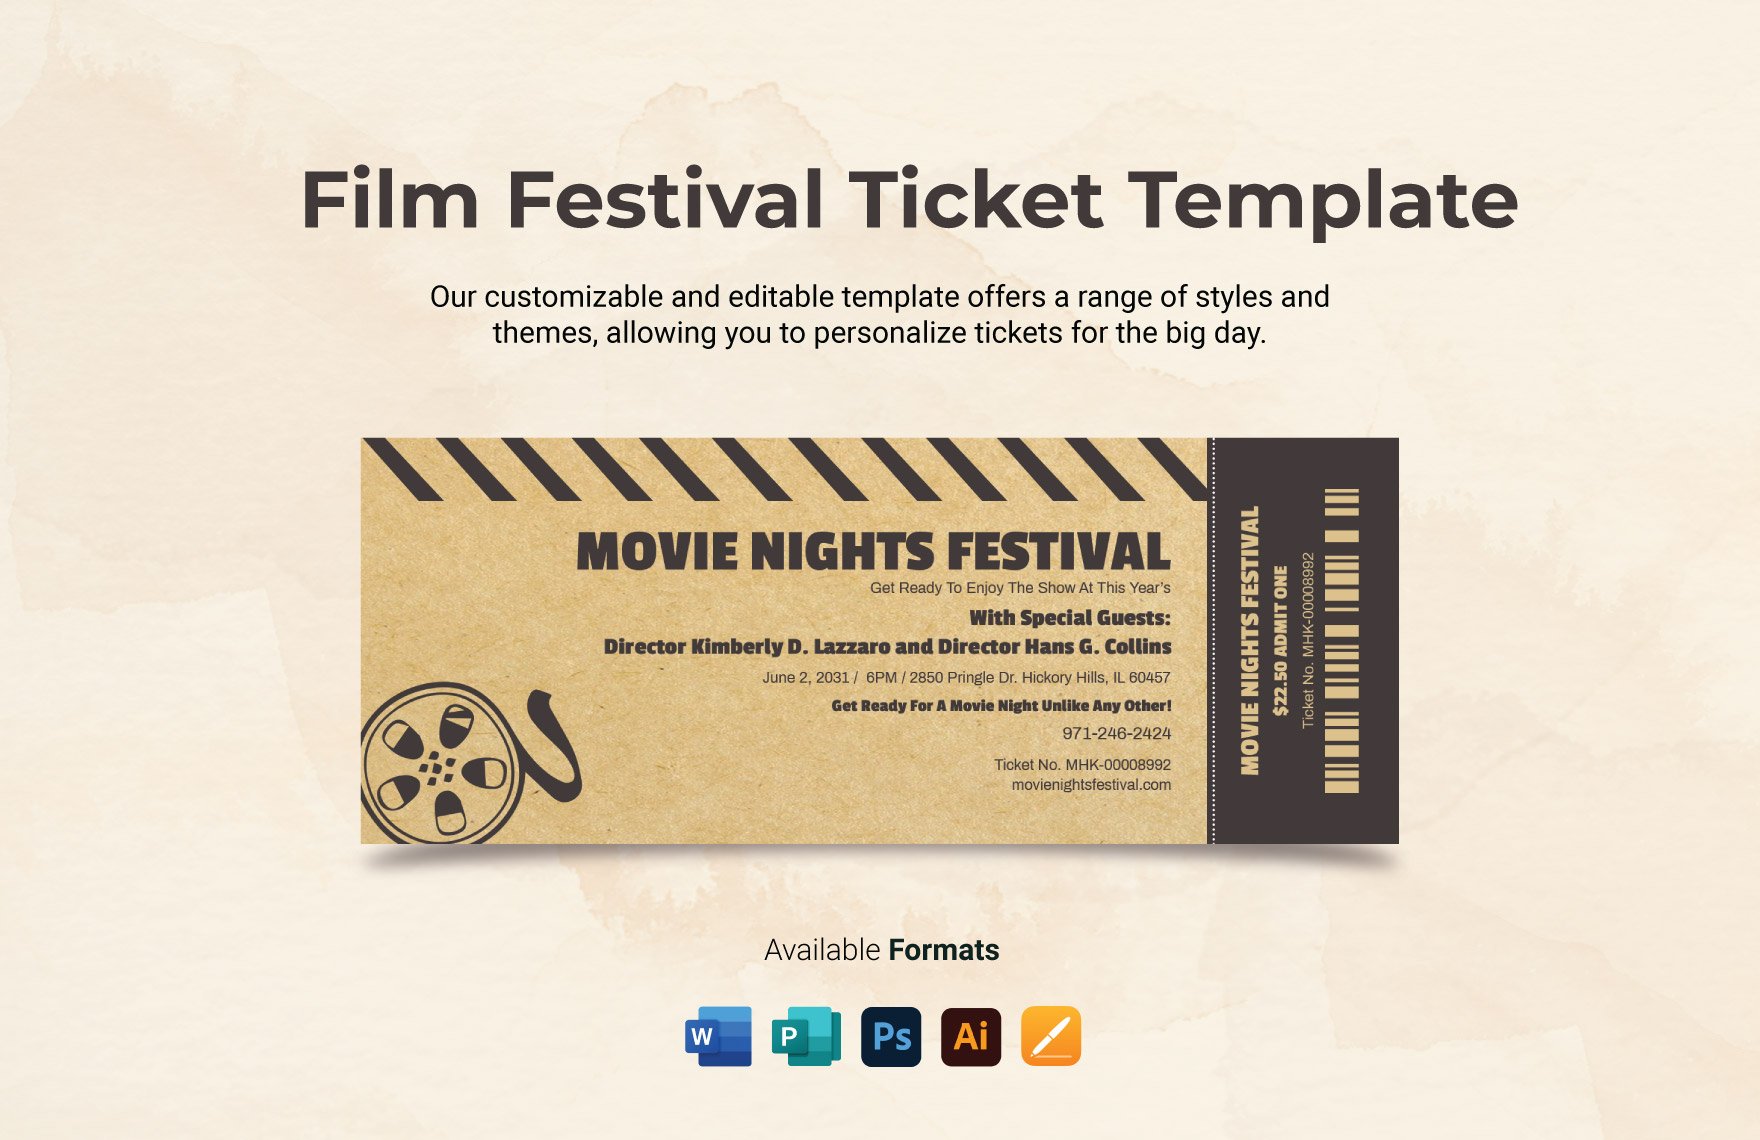 Film Festival Ticket Template